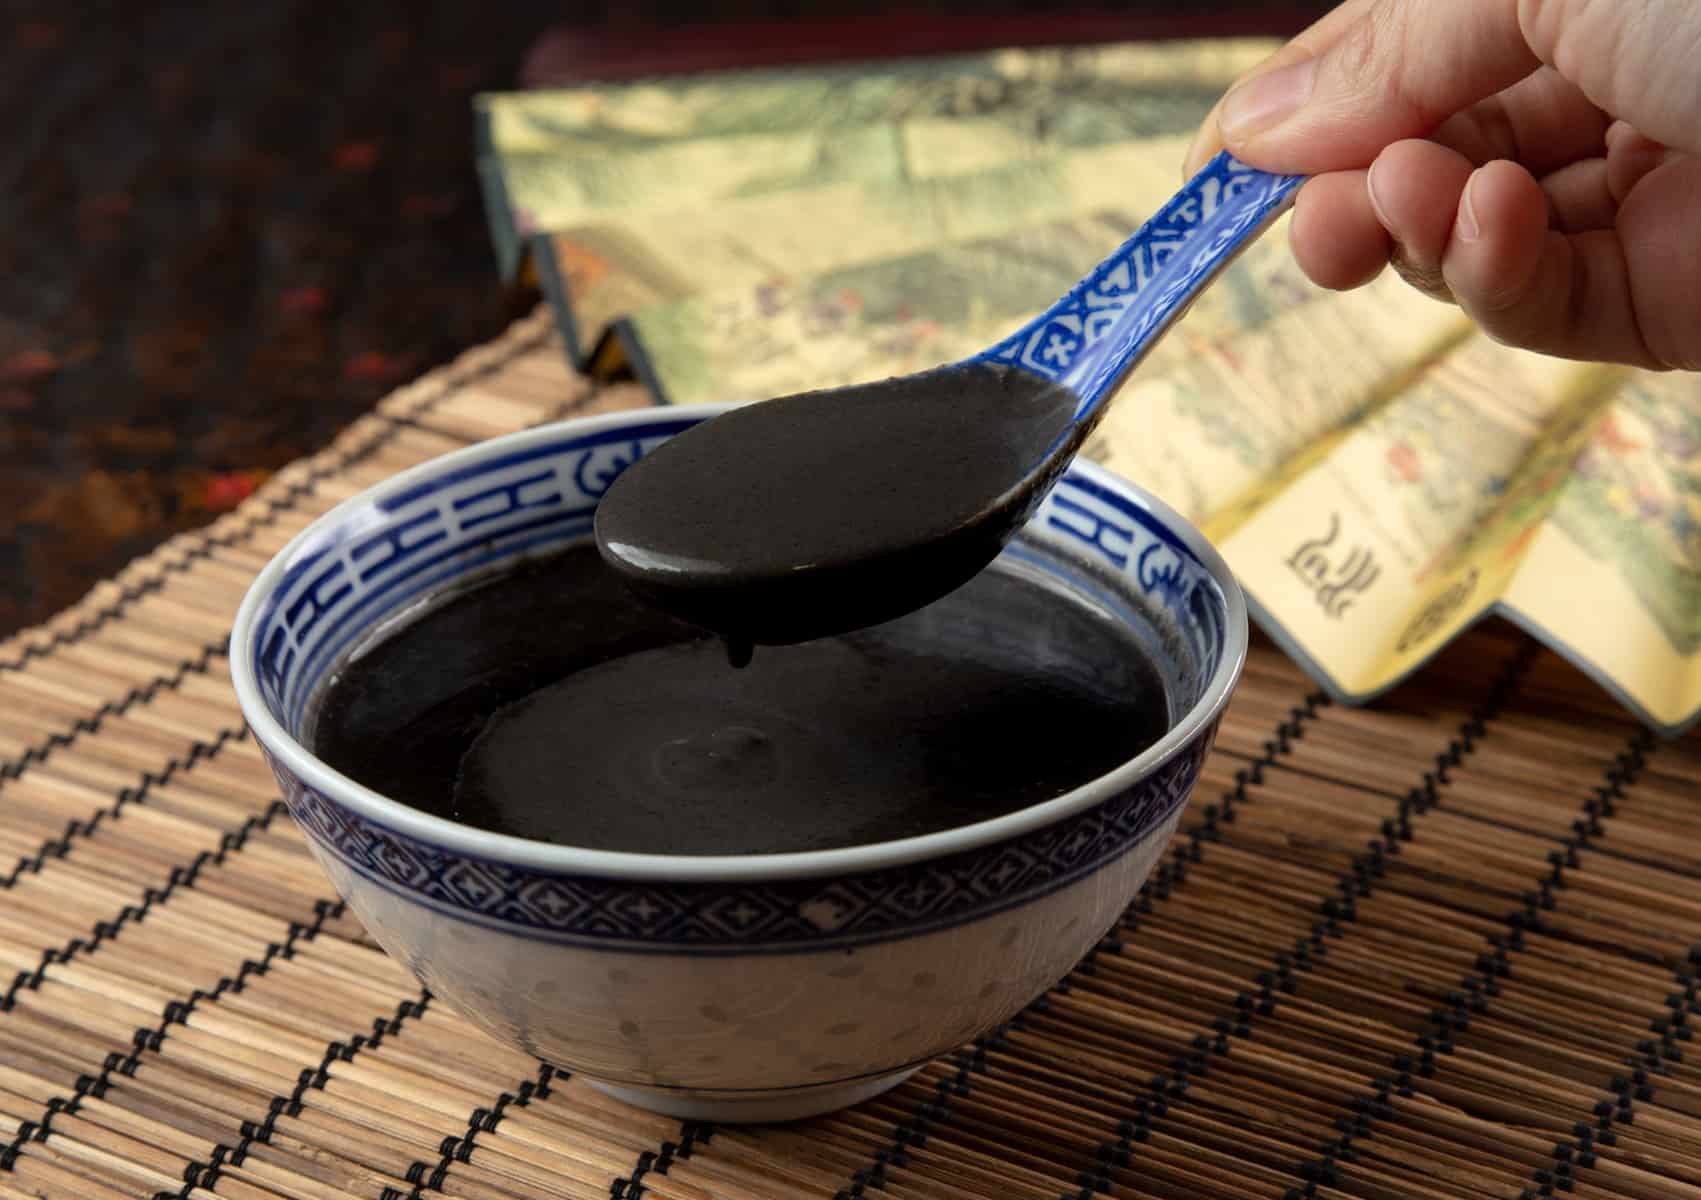 black sesame soup | black sesame soup recipe | 芝麻糊 | instant pot black sesame soup | chinese dessert | dessert recipes #AmyJacky #recipe #chinese #asian